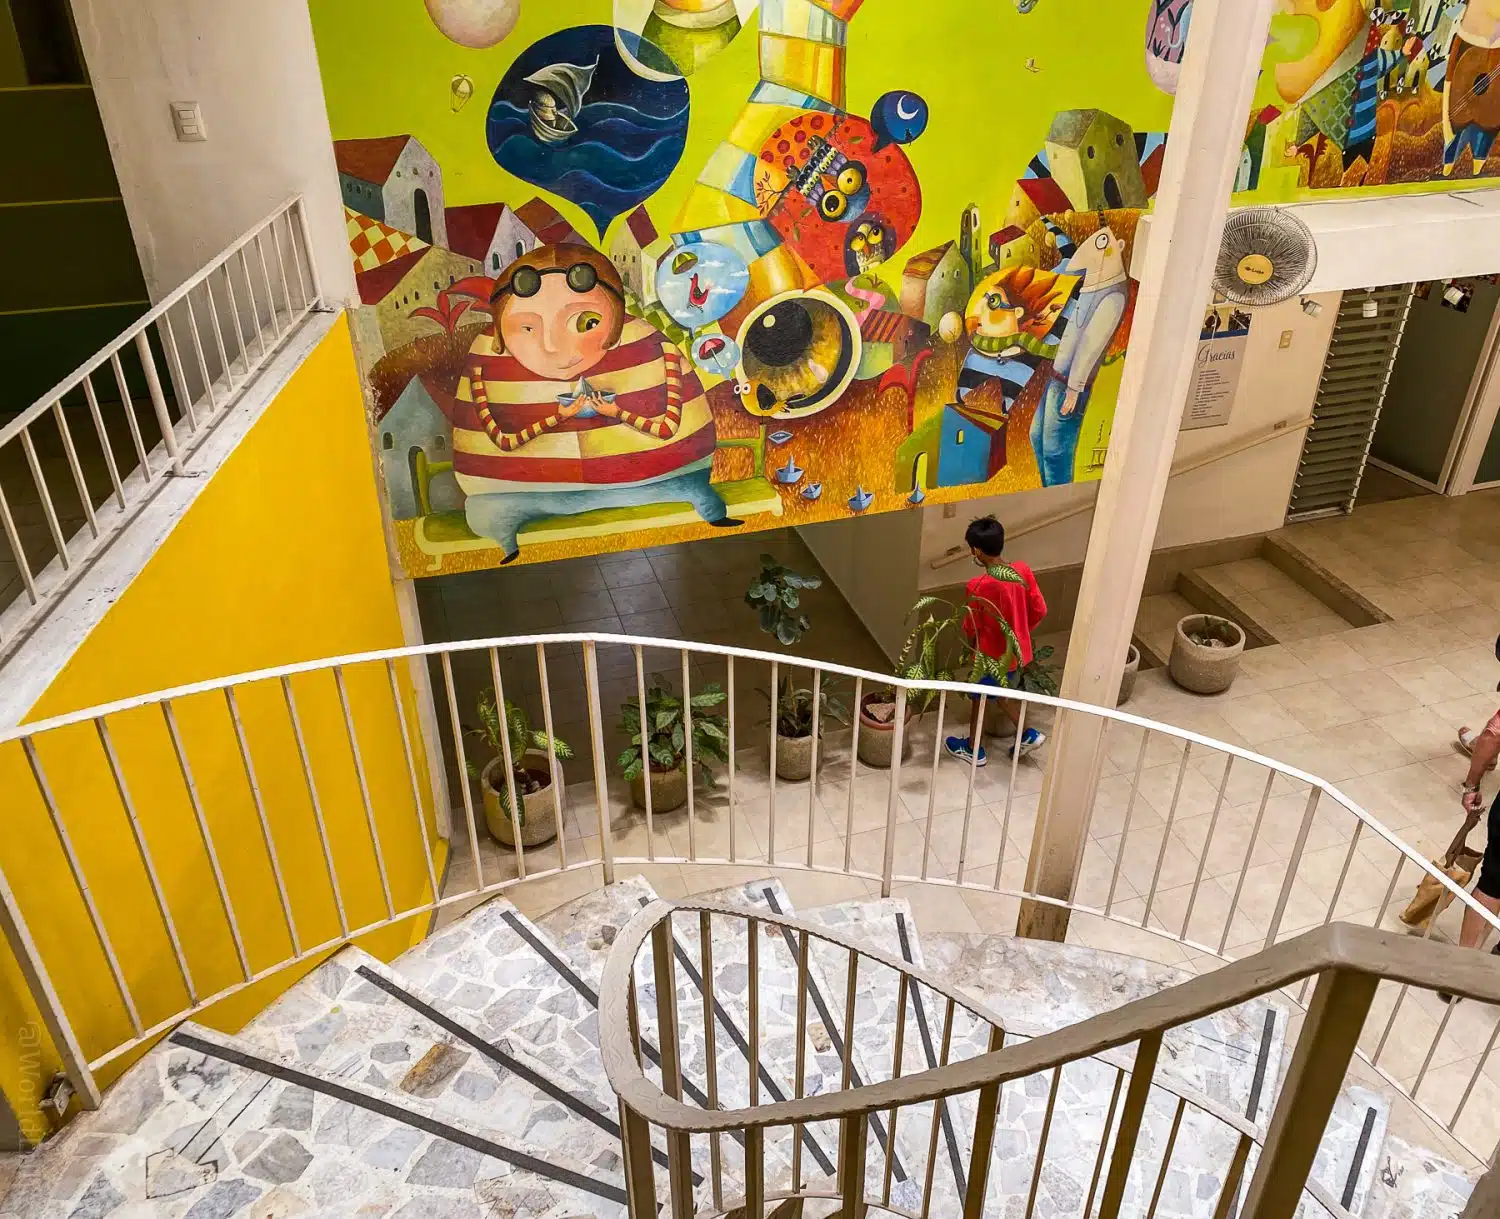 The staircase inside Habla Spanish language school.